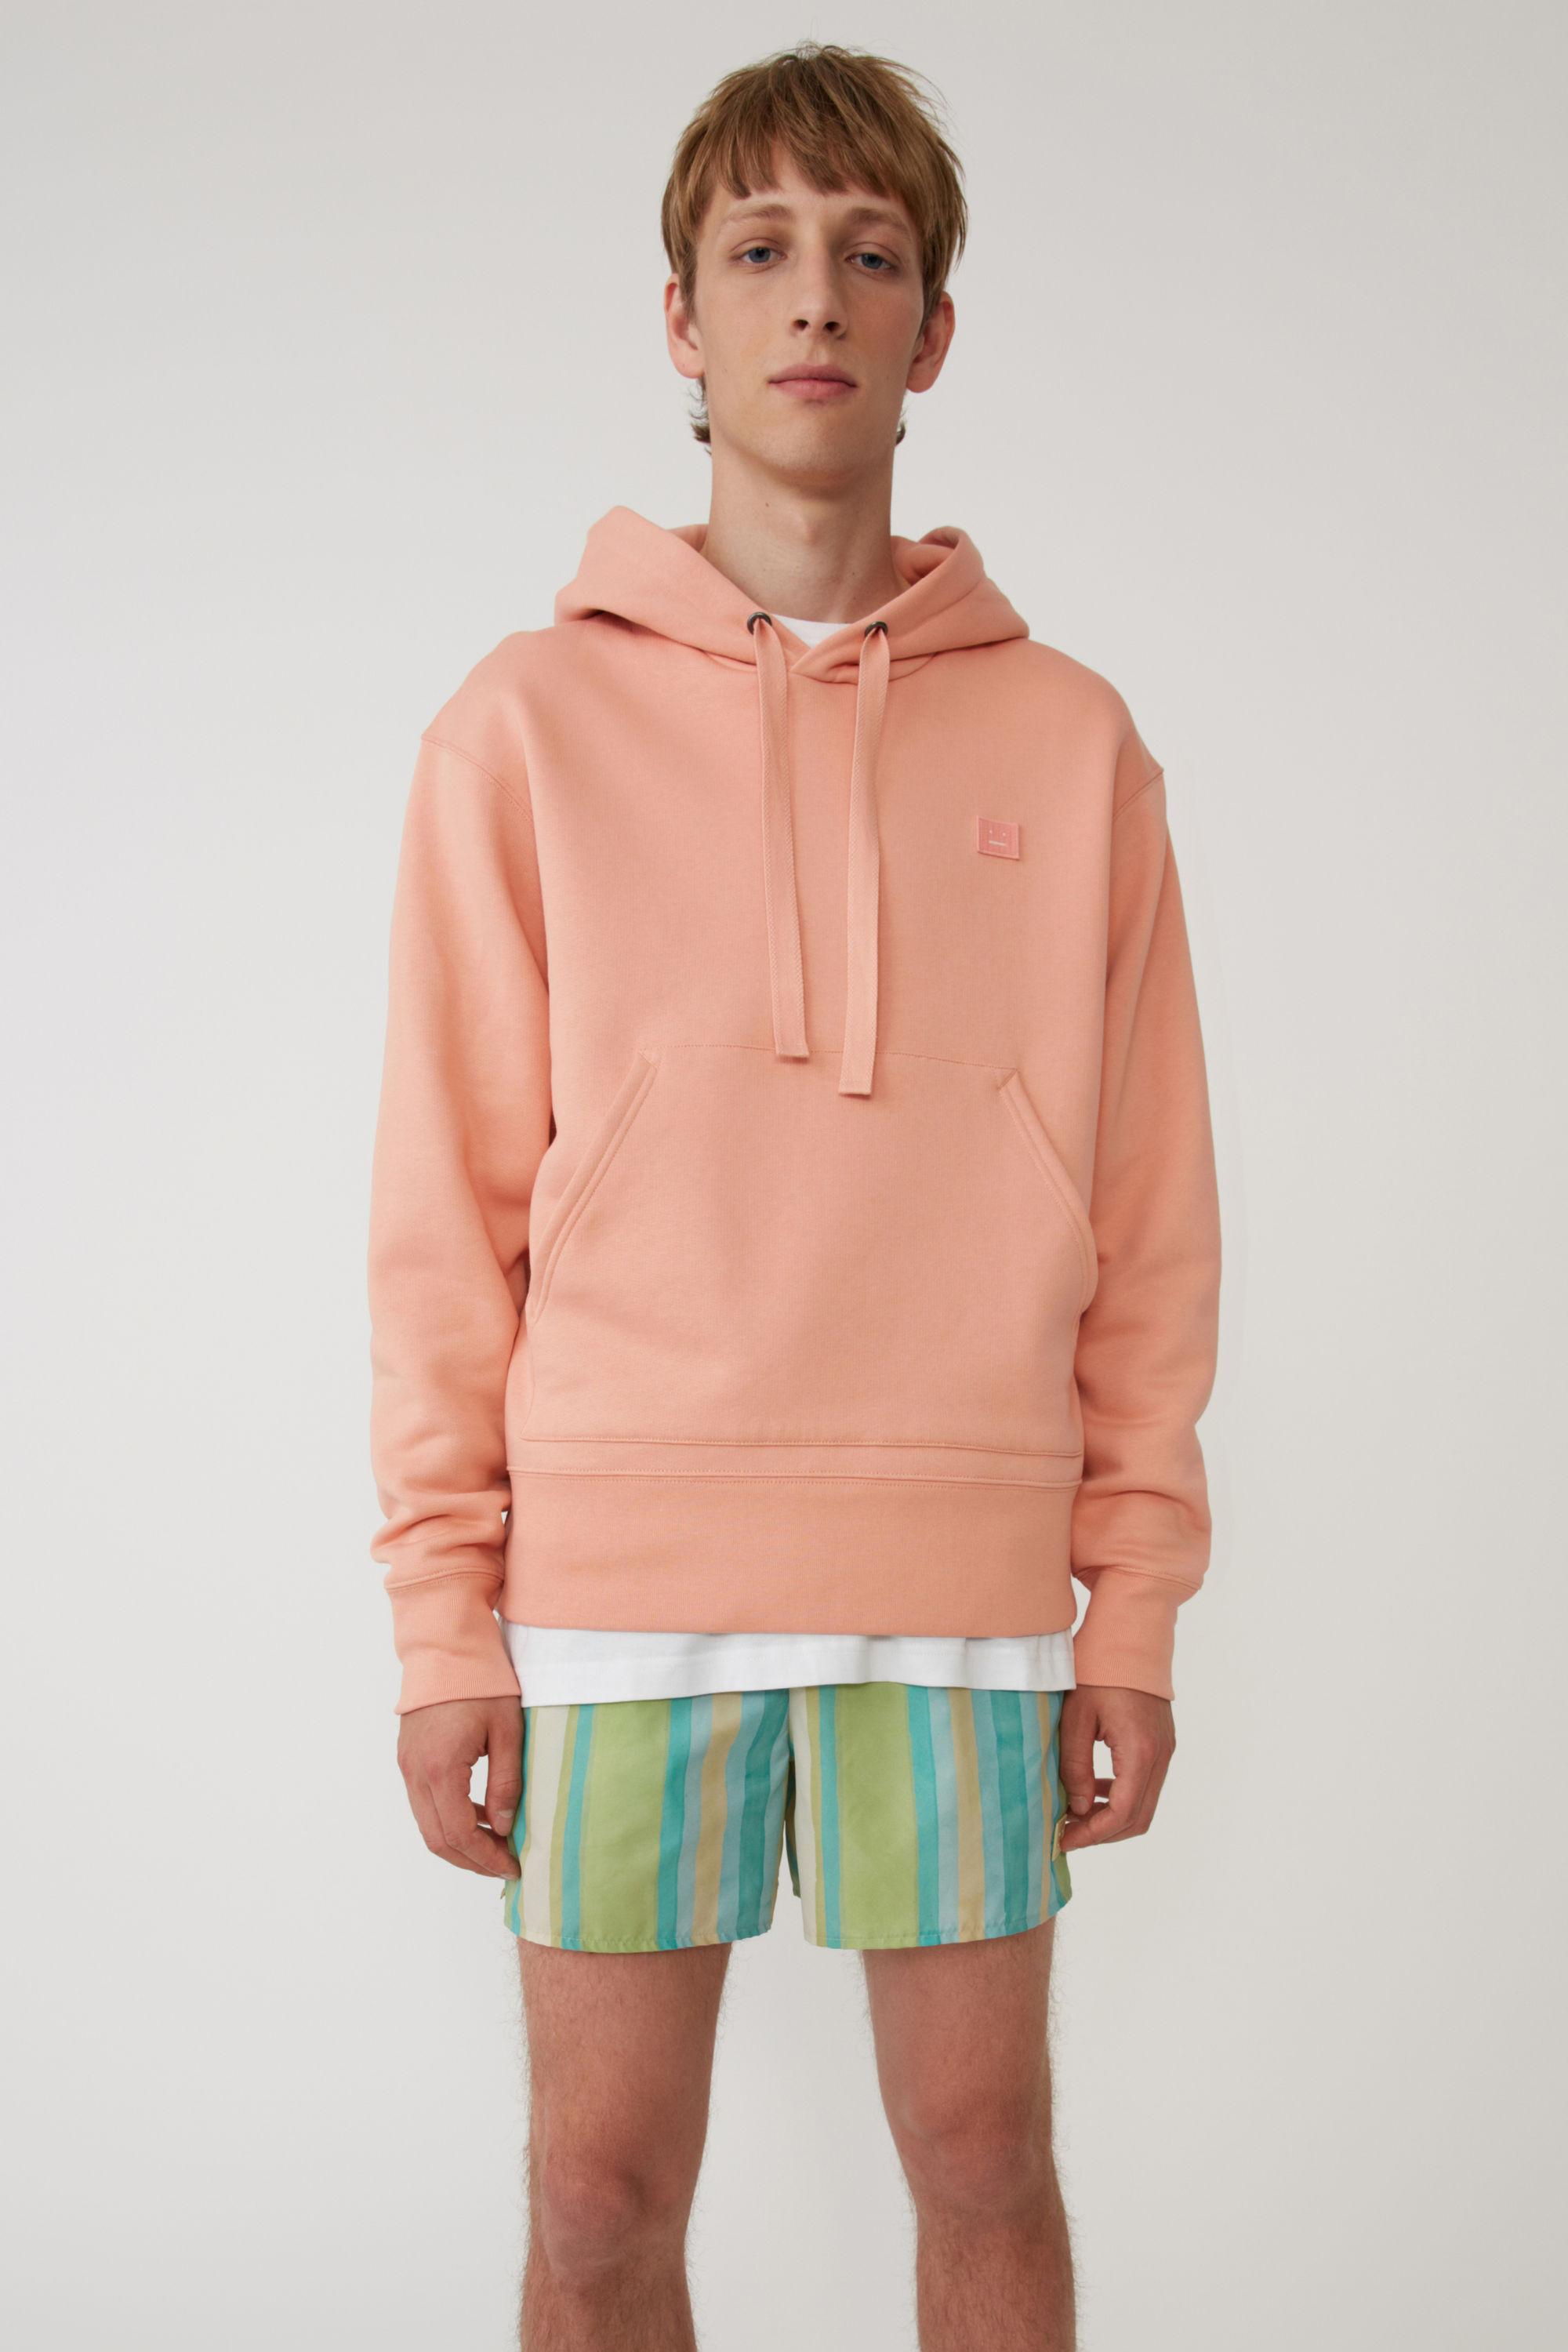 Acne Studios Cotton Hooded Sweatshirt in Pale Pink (Pink) - Lyst